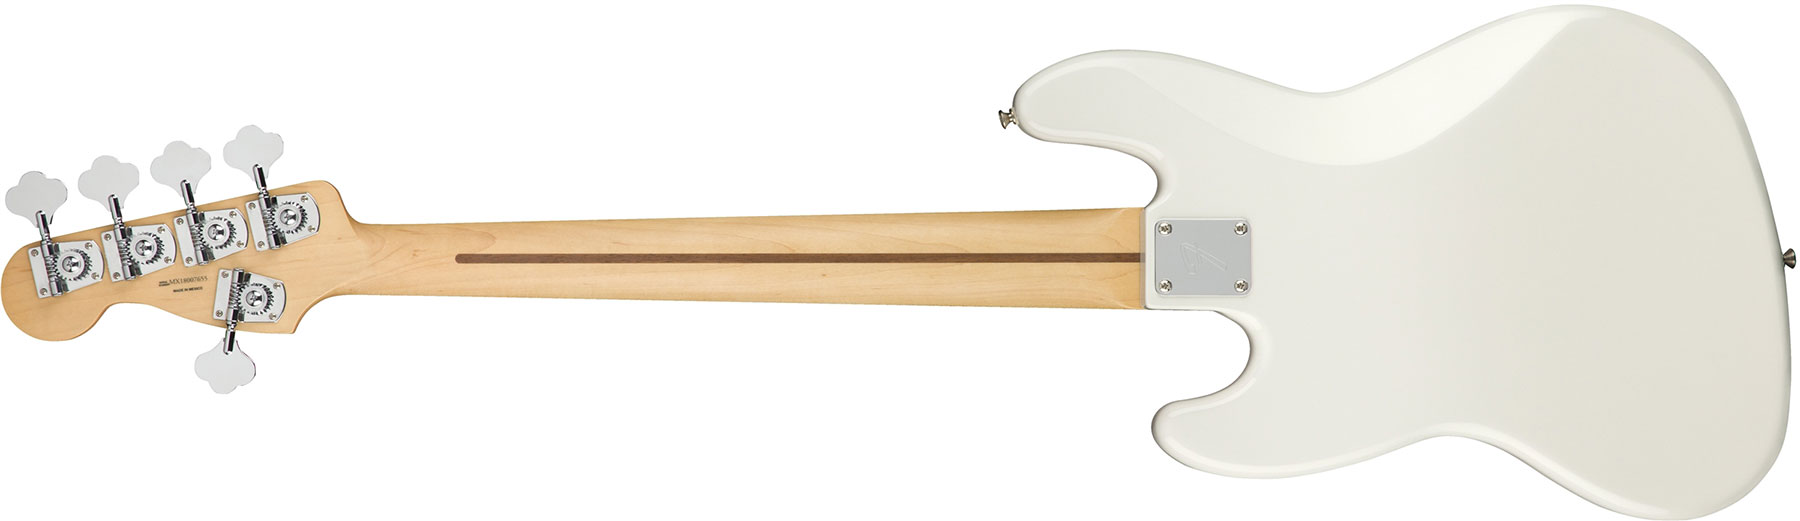 Fender Jazz Bass Player V 5-cordes Mex Pf - Polar White - Bajo eléctrico de cuerpo sólido - Variation 1